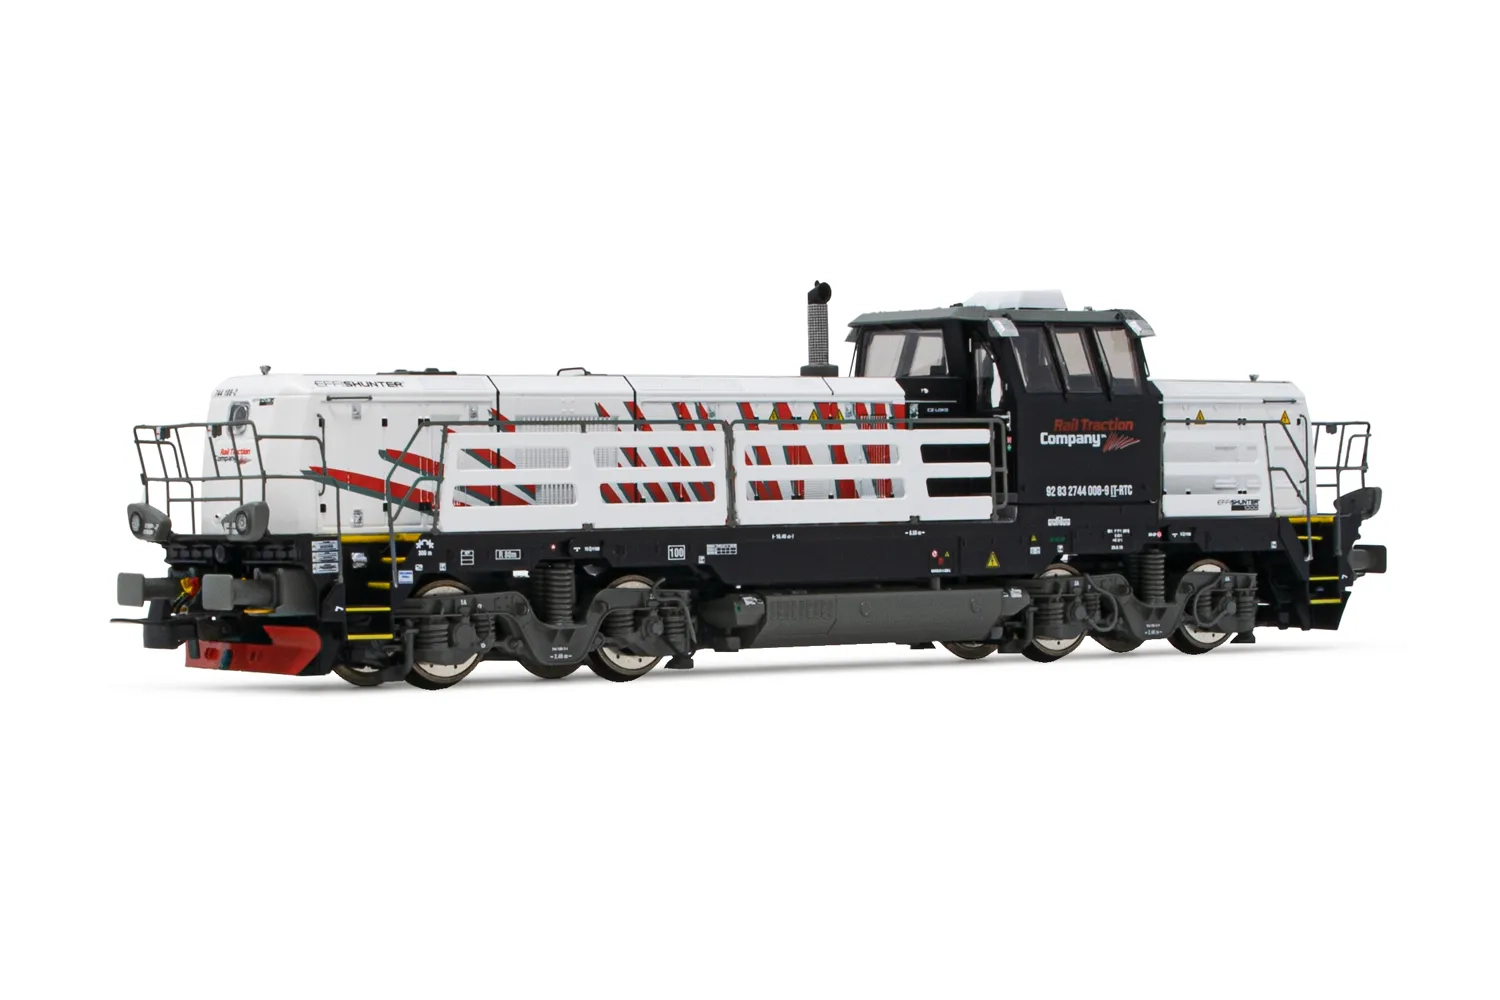 Rail Traction Company, locomotiva diesel da manovra EffiShunter 1000, livrea bianca/nera, ep. VI, con DCC Sound decoder